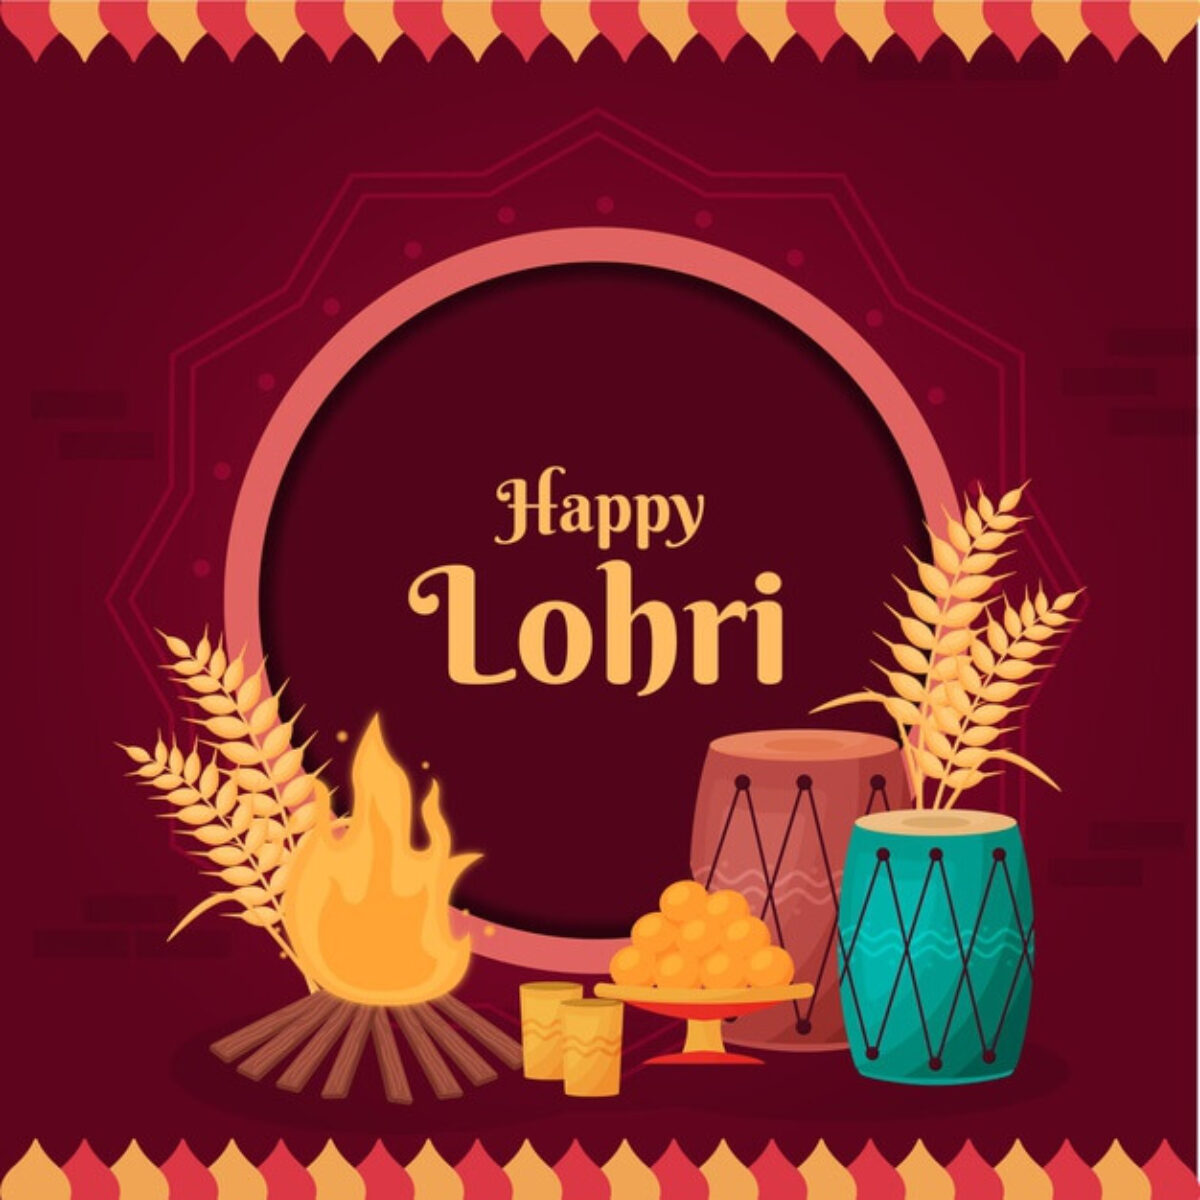 Happy Lohri :Wishes, Images, Quotes, Whatsapp Status, and Pics